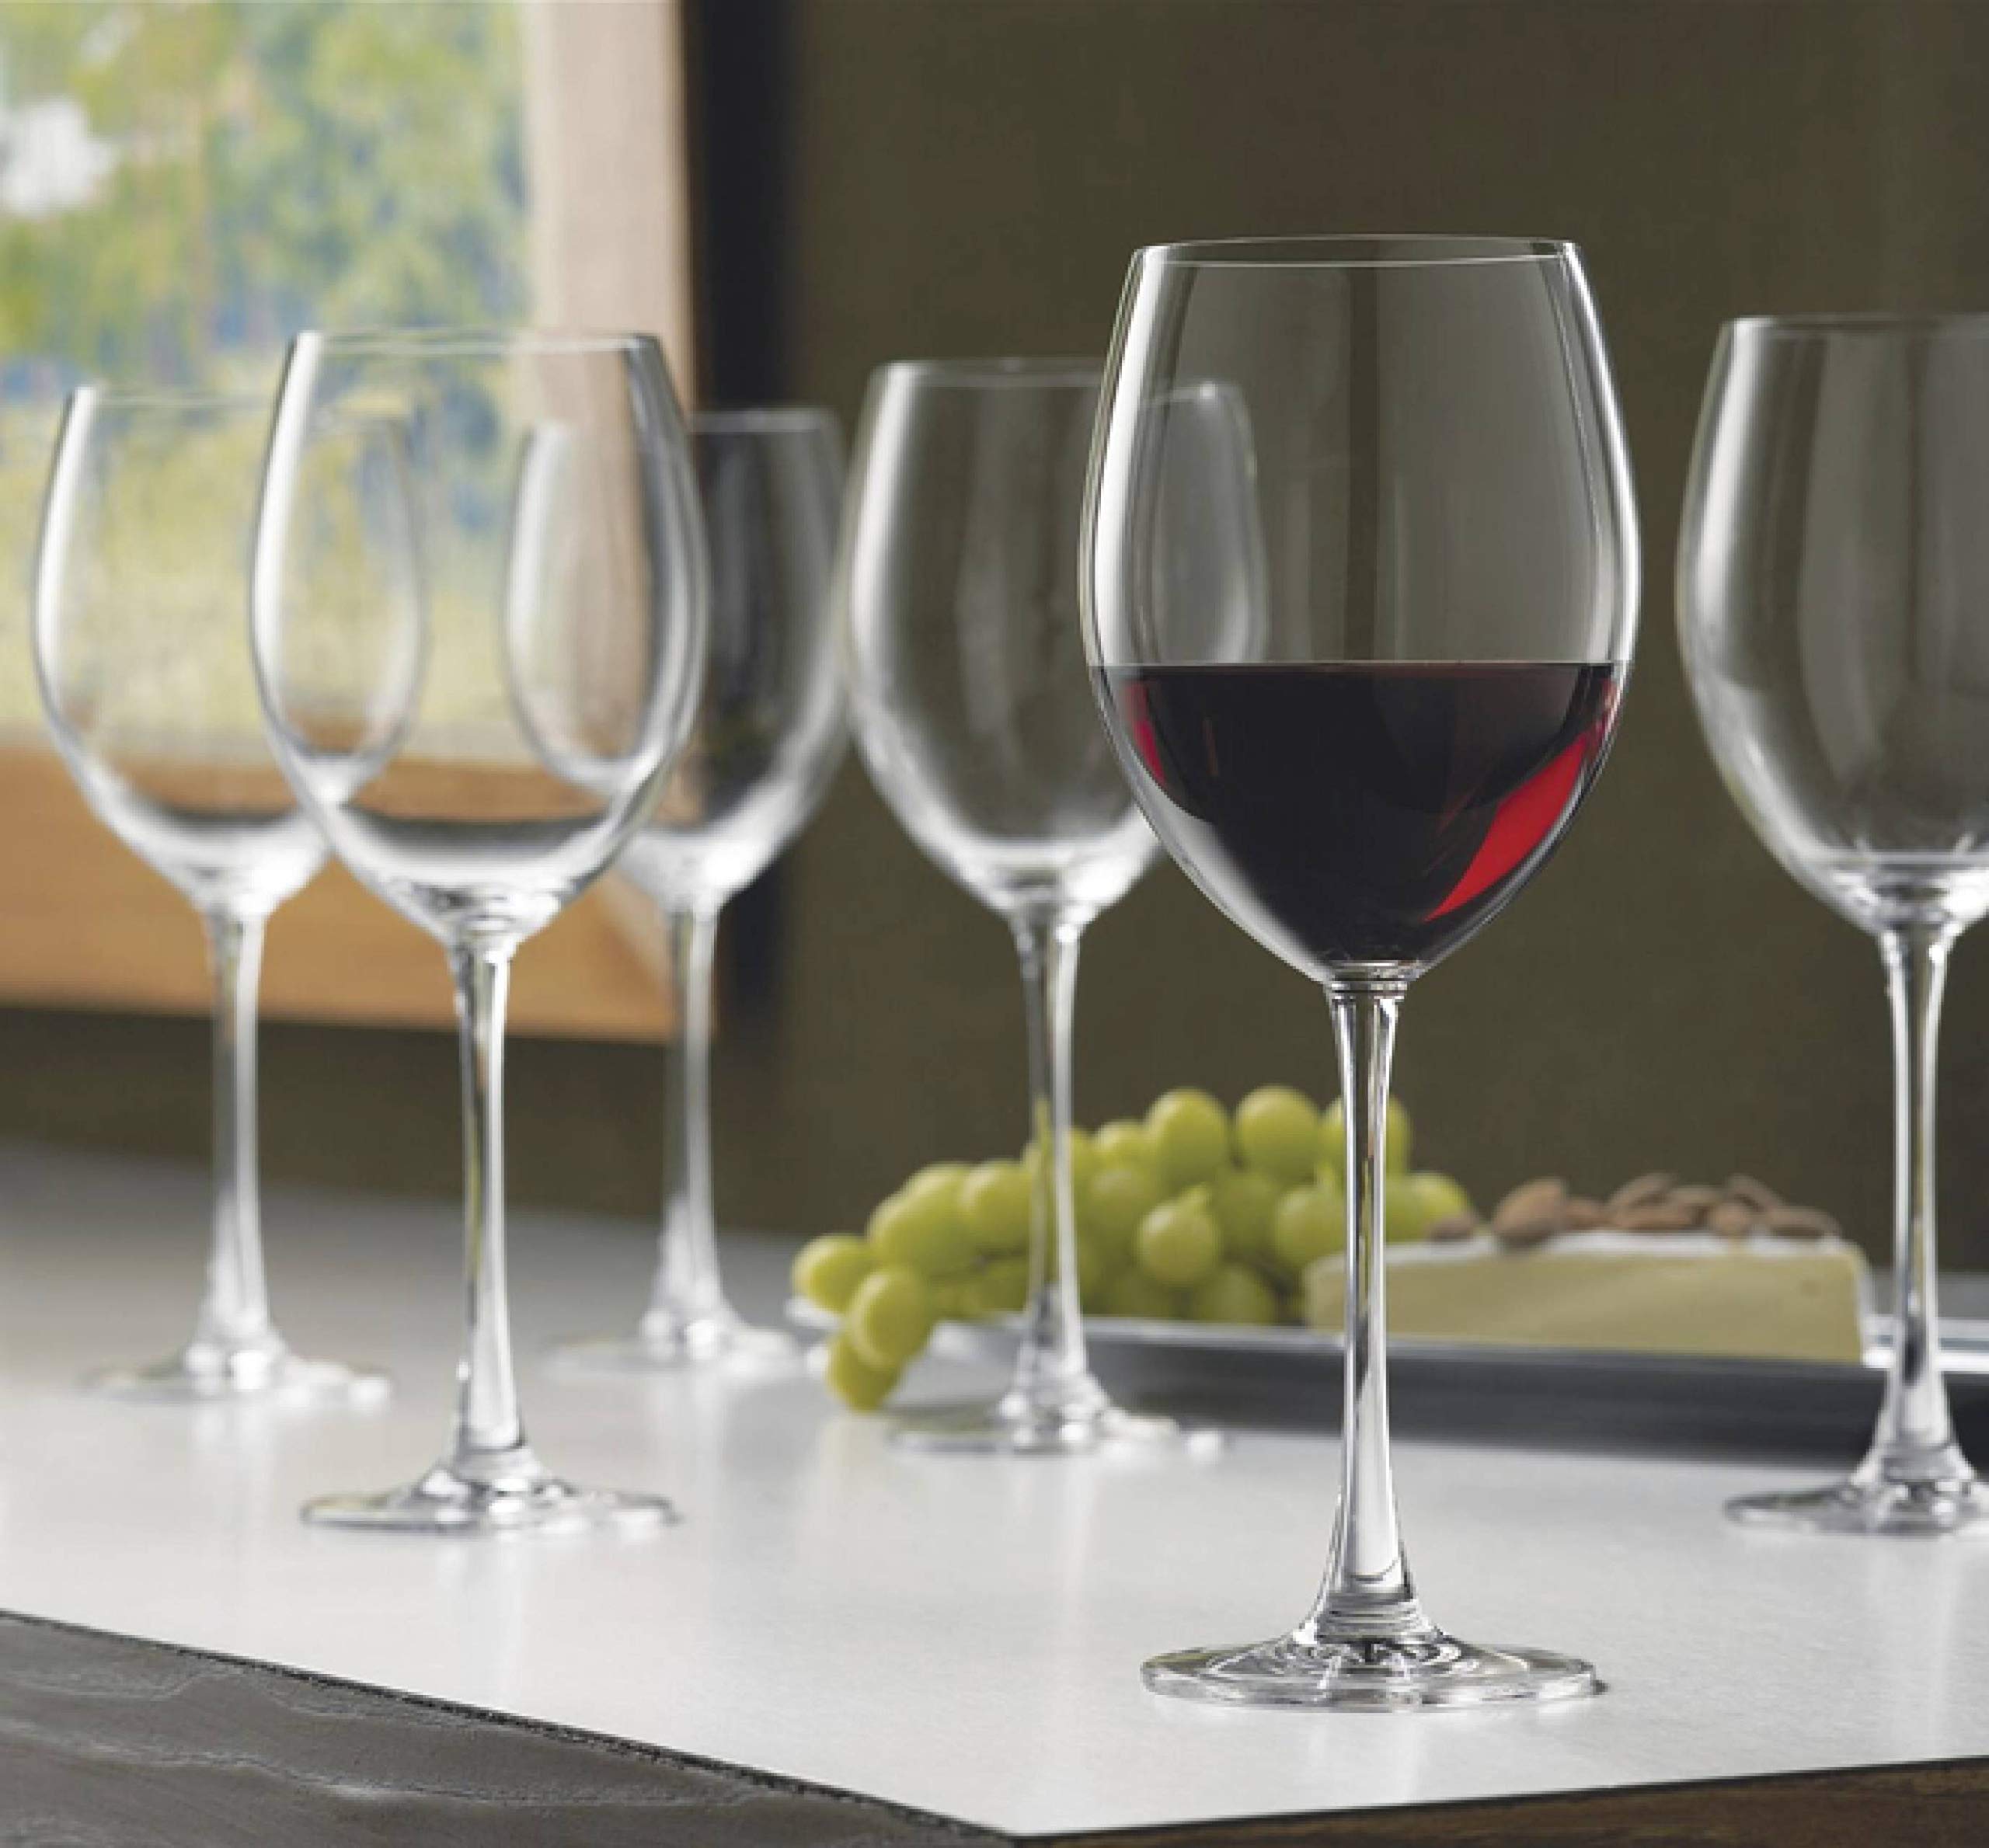 Lenox Tuscany Classics Red Wine Glasses, Buy 4, Get 6 882864391216 | eBay